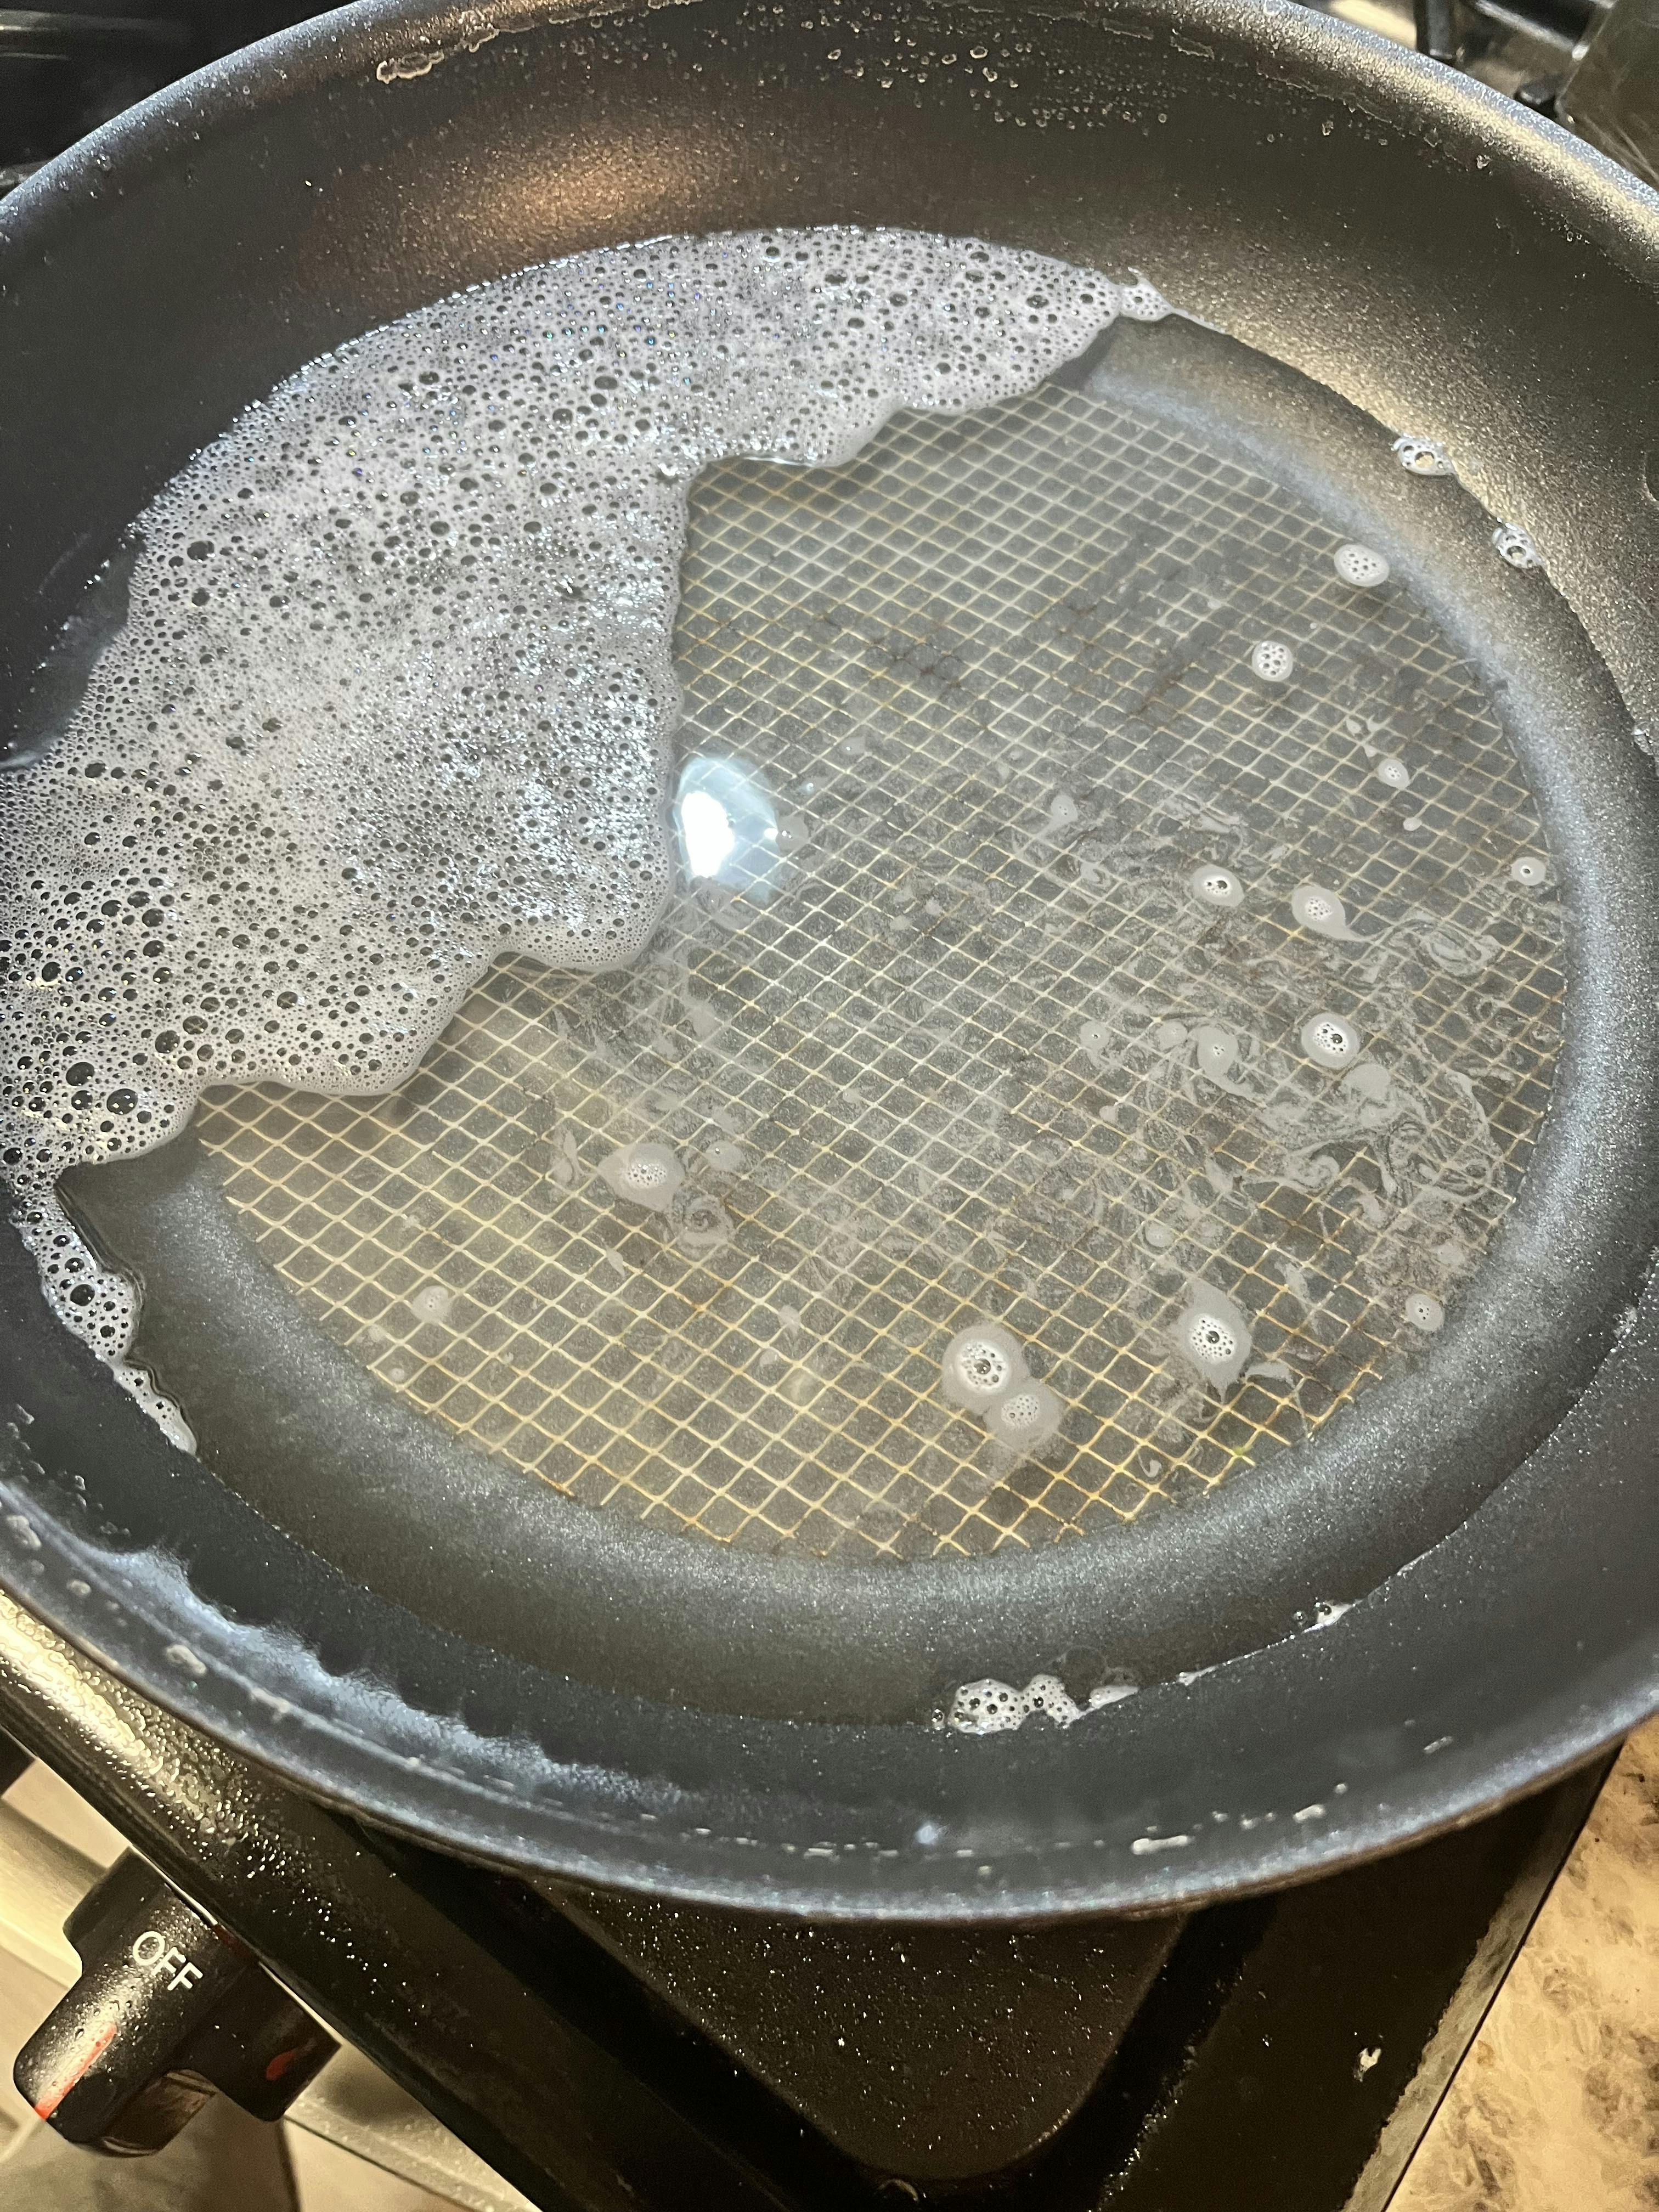 Water, medium heat and dish soap.